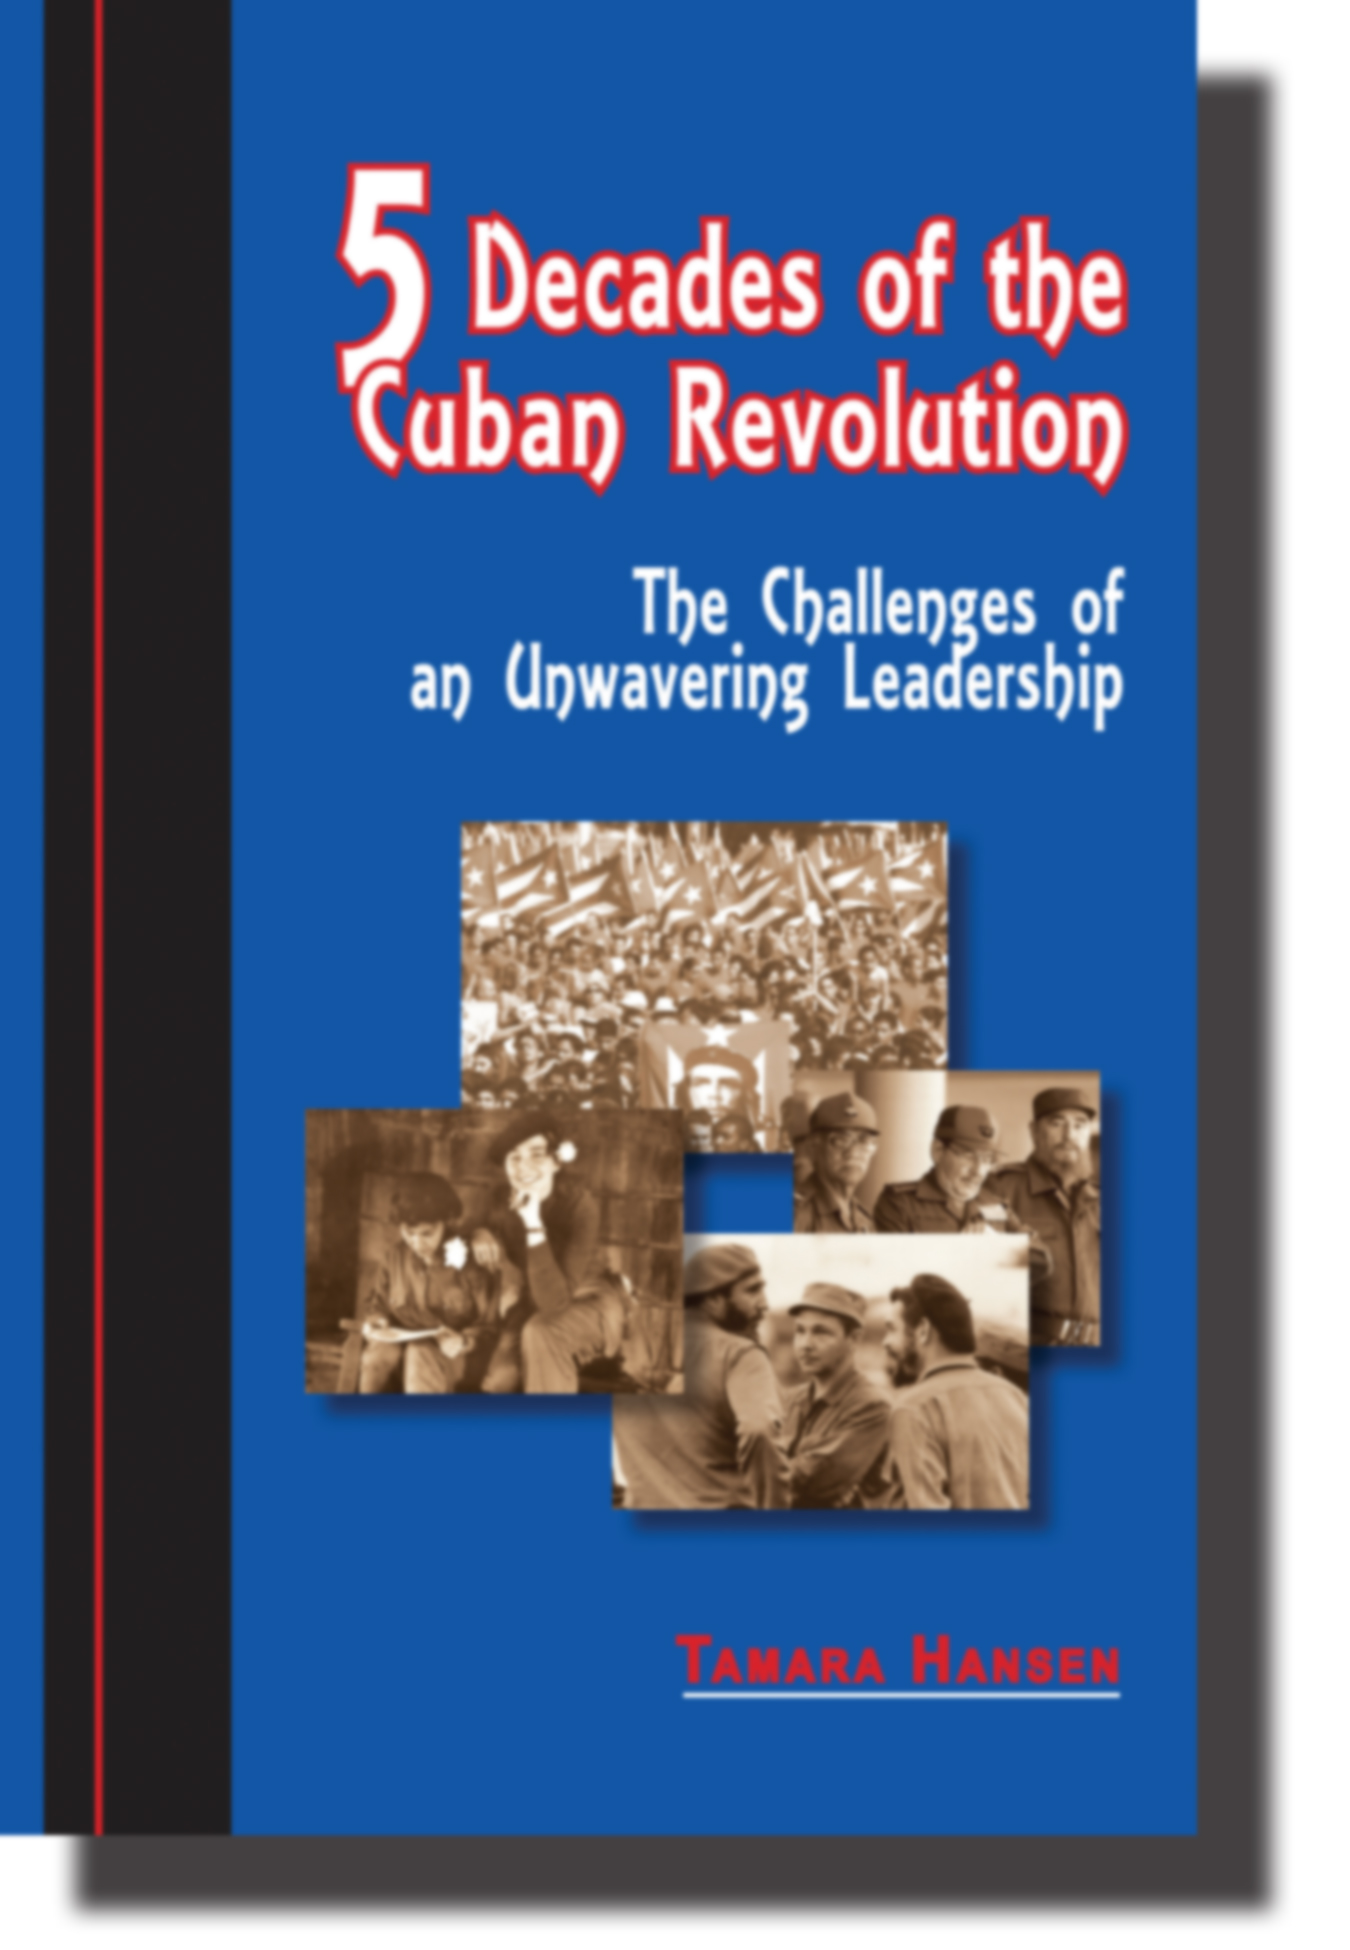 [5 Decades of the Cuban Revolution]